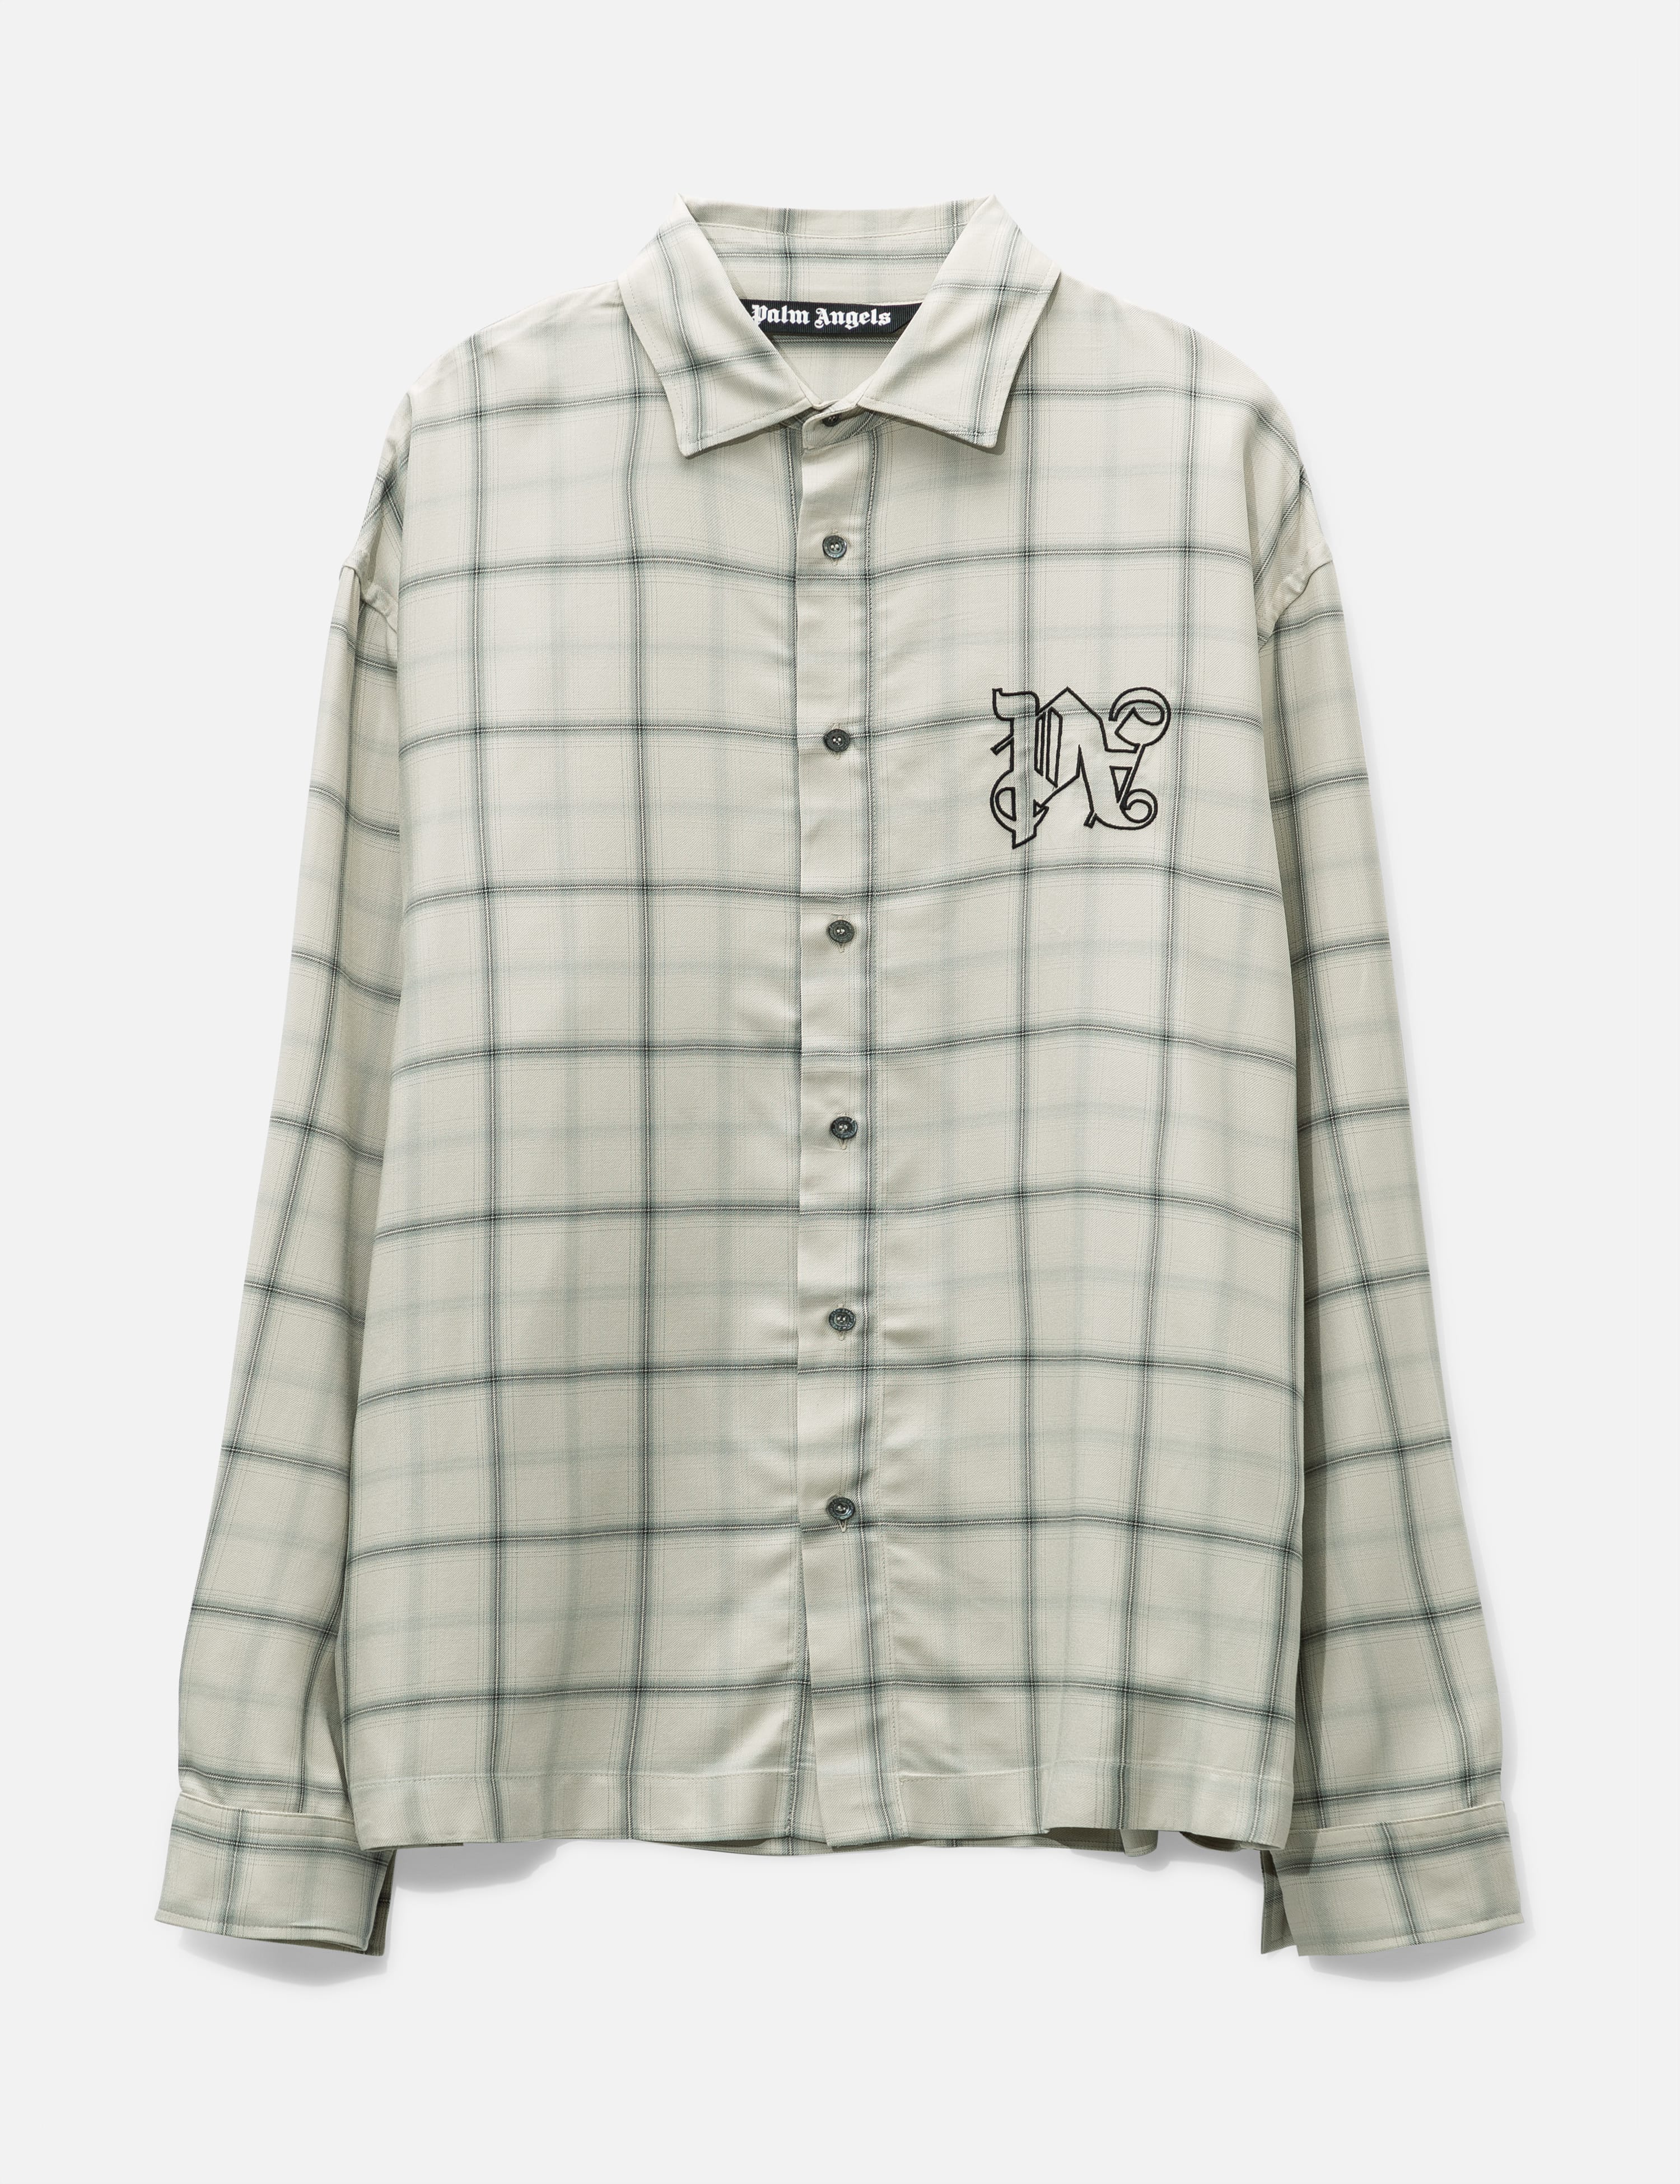 Stüssy - Boxy Striped Shirt | HBX - HYPEBEAST 為您搜羅全球潮流時尚品牌